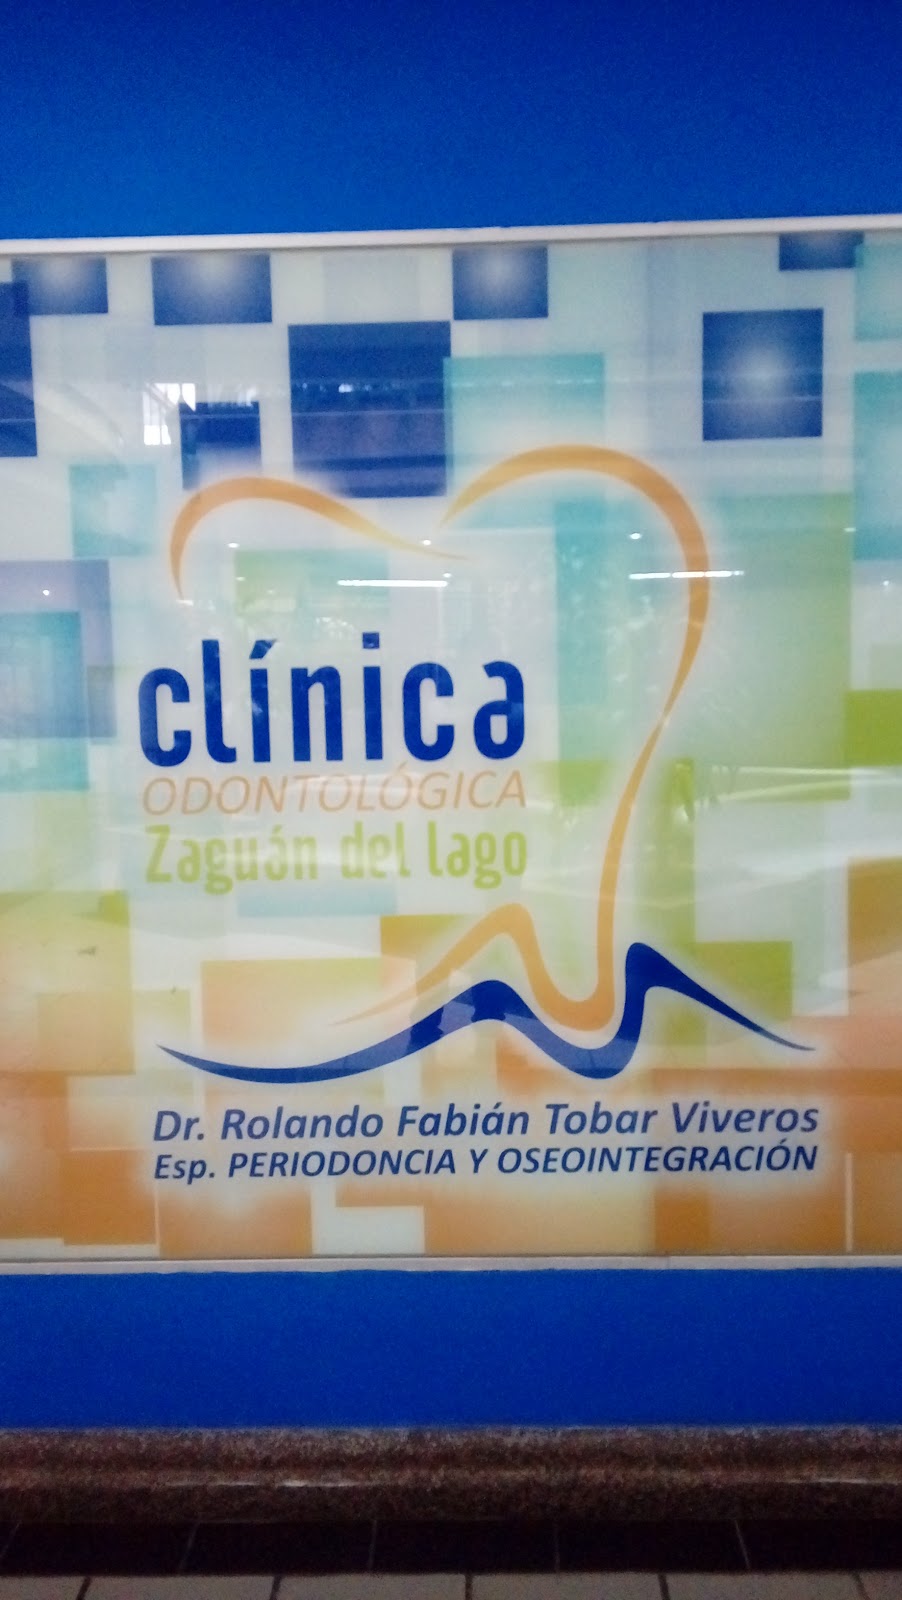 Clinica Odontologica Zaguán Del Lago